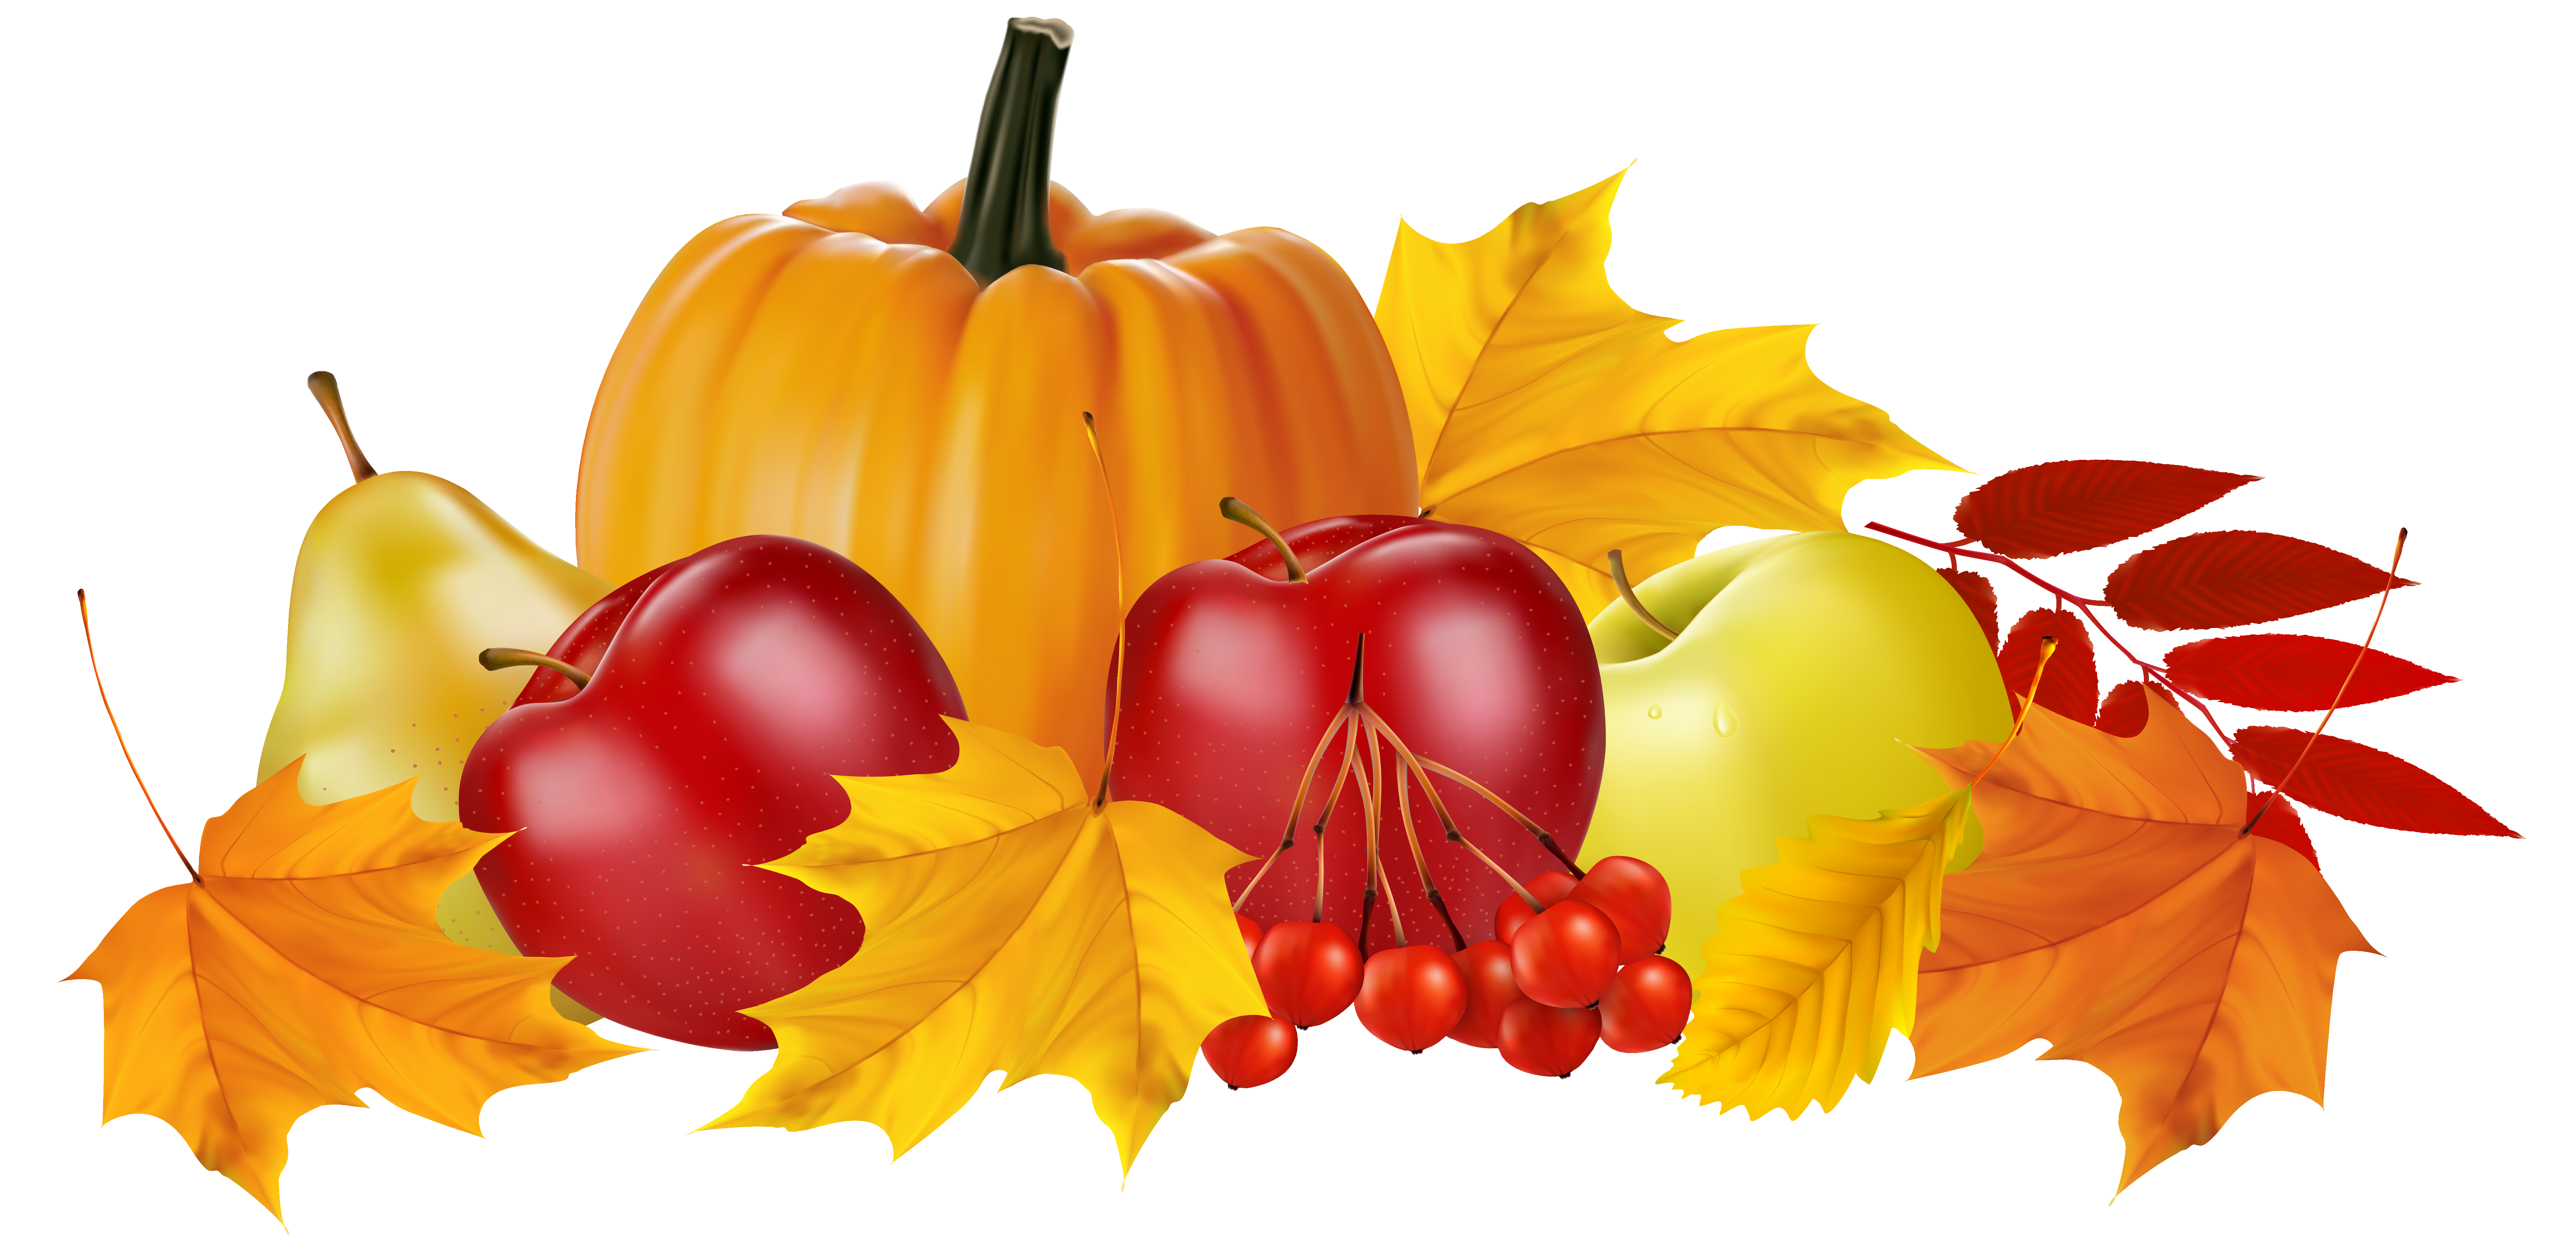 Autumn Clip art - Autumn Pumpkin and Fruits PNG Clipart Image png